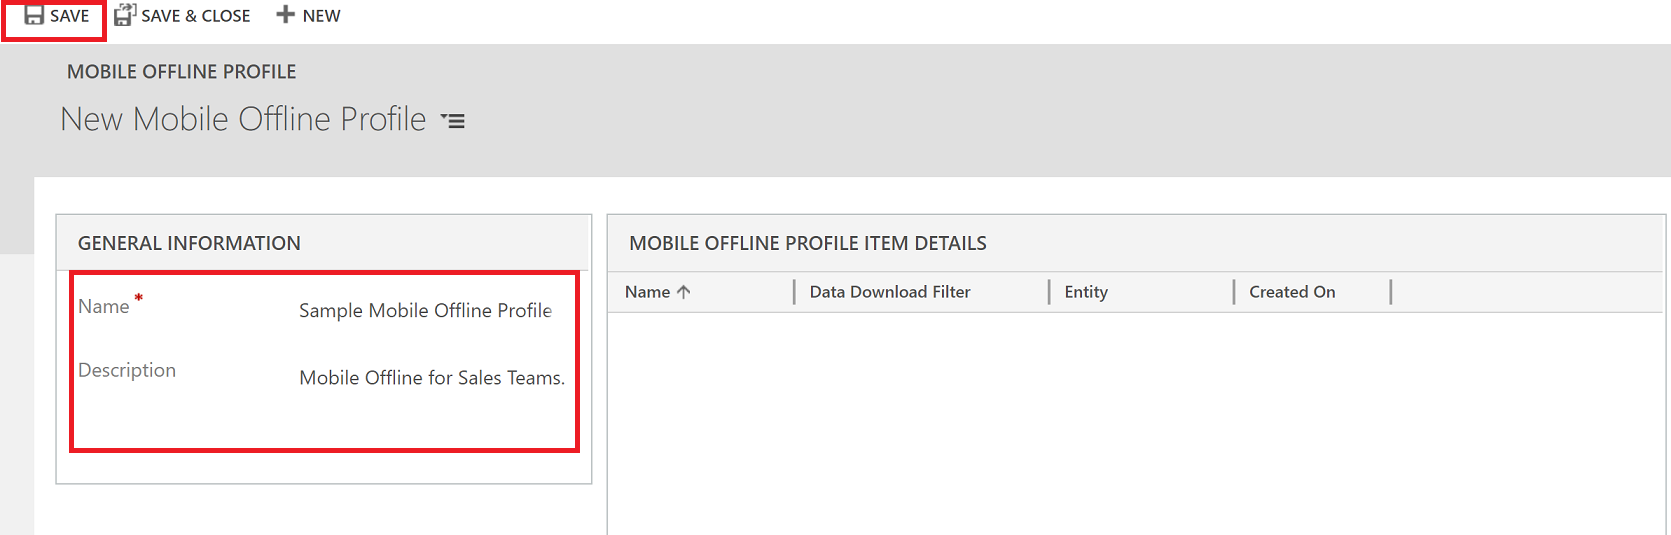 Mobile Offline profilinizi adlandırma